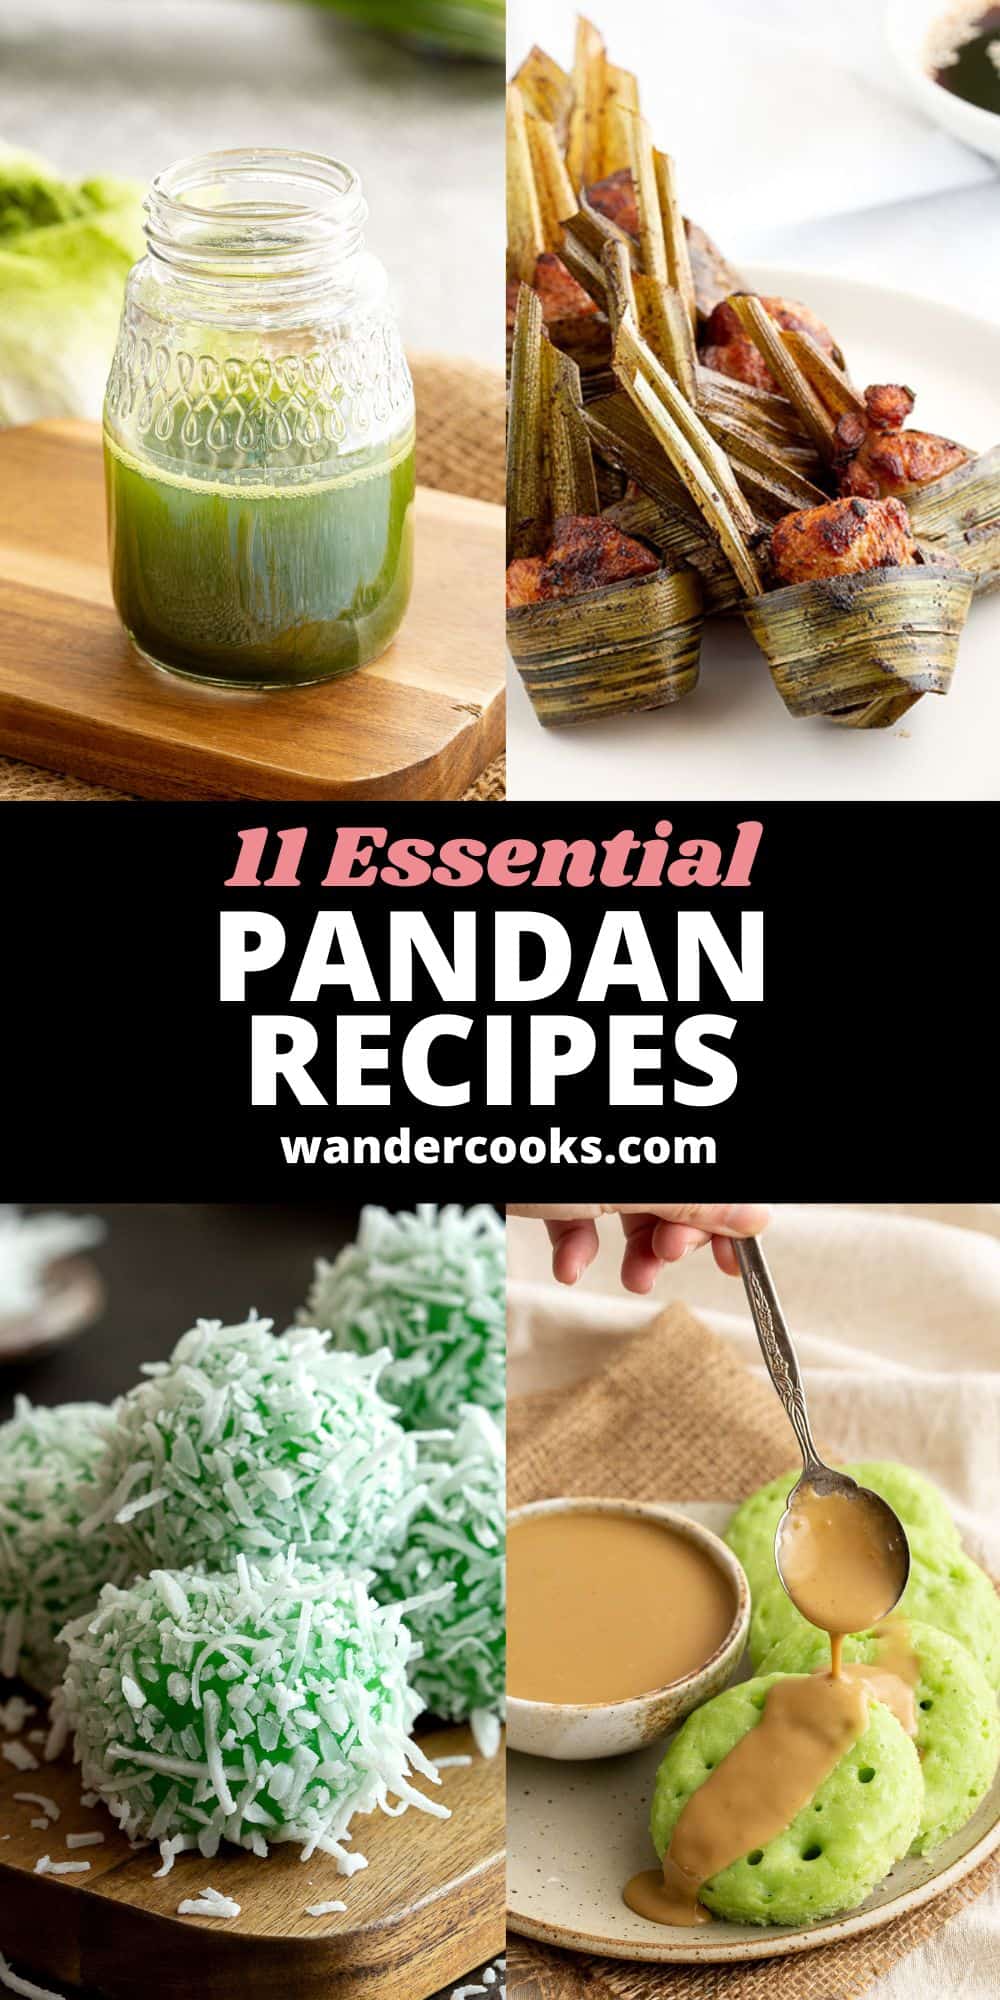 11 Essential Sweet & Savoury Pandan Recipes